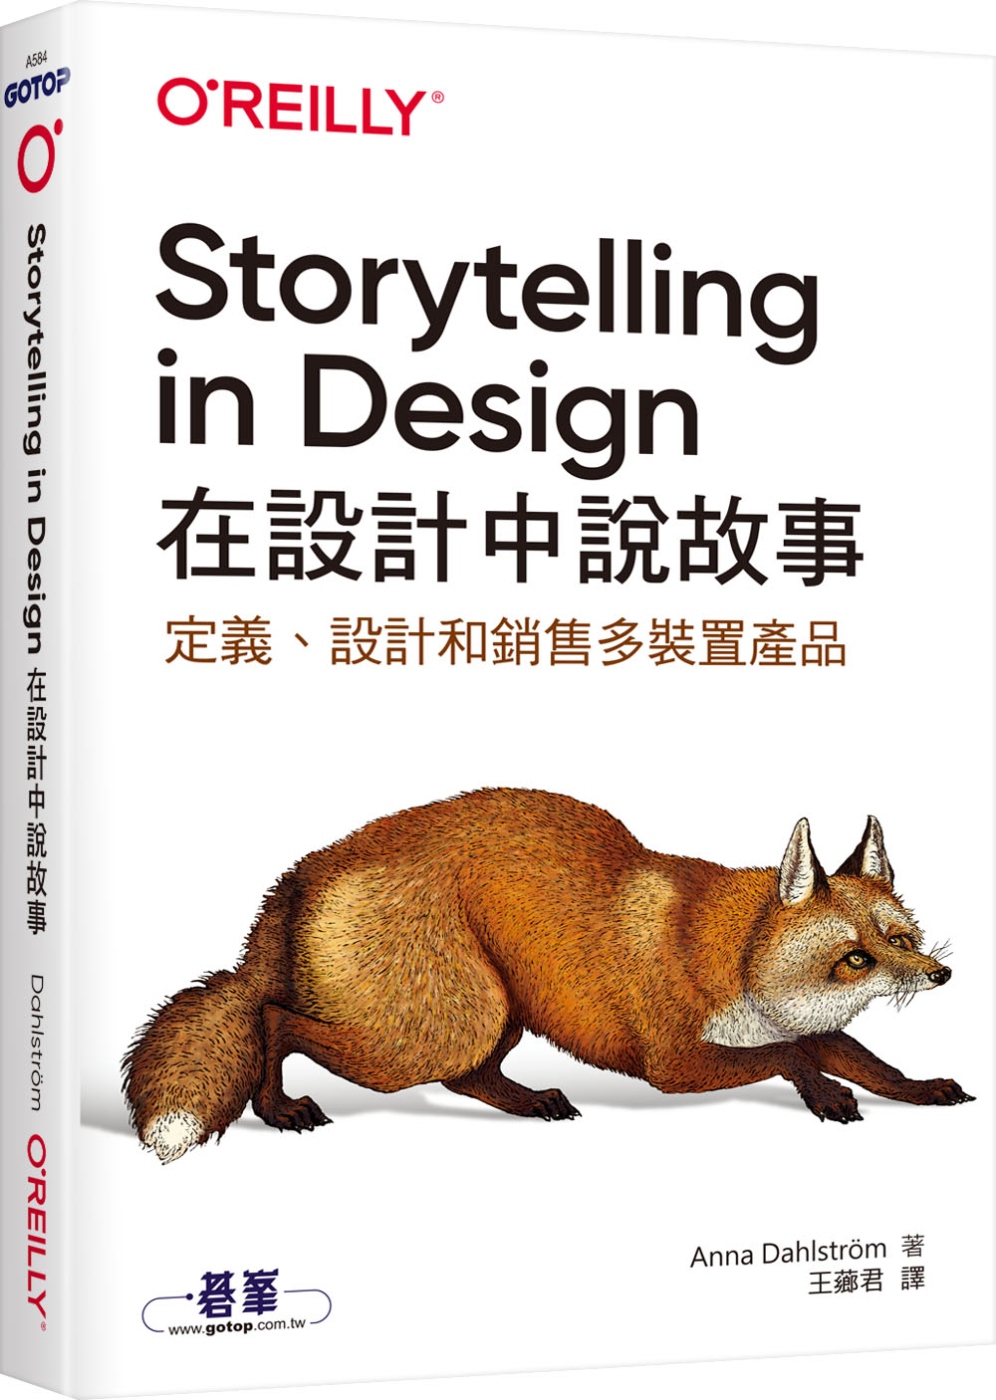 Storytelling in Design 在設計中說故事